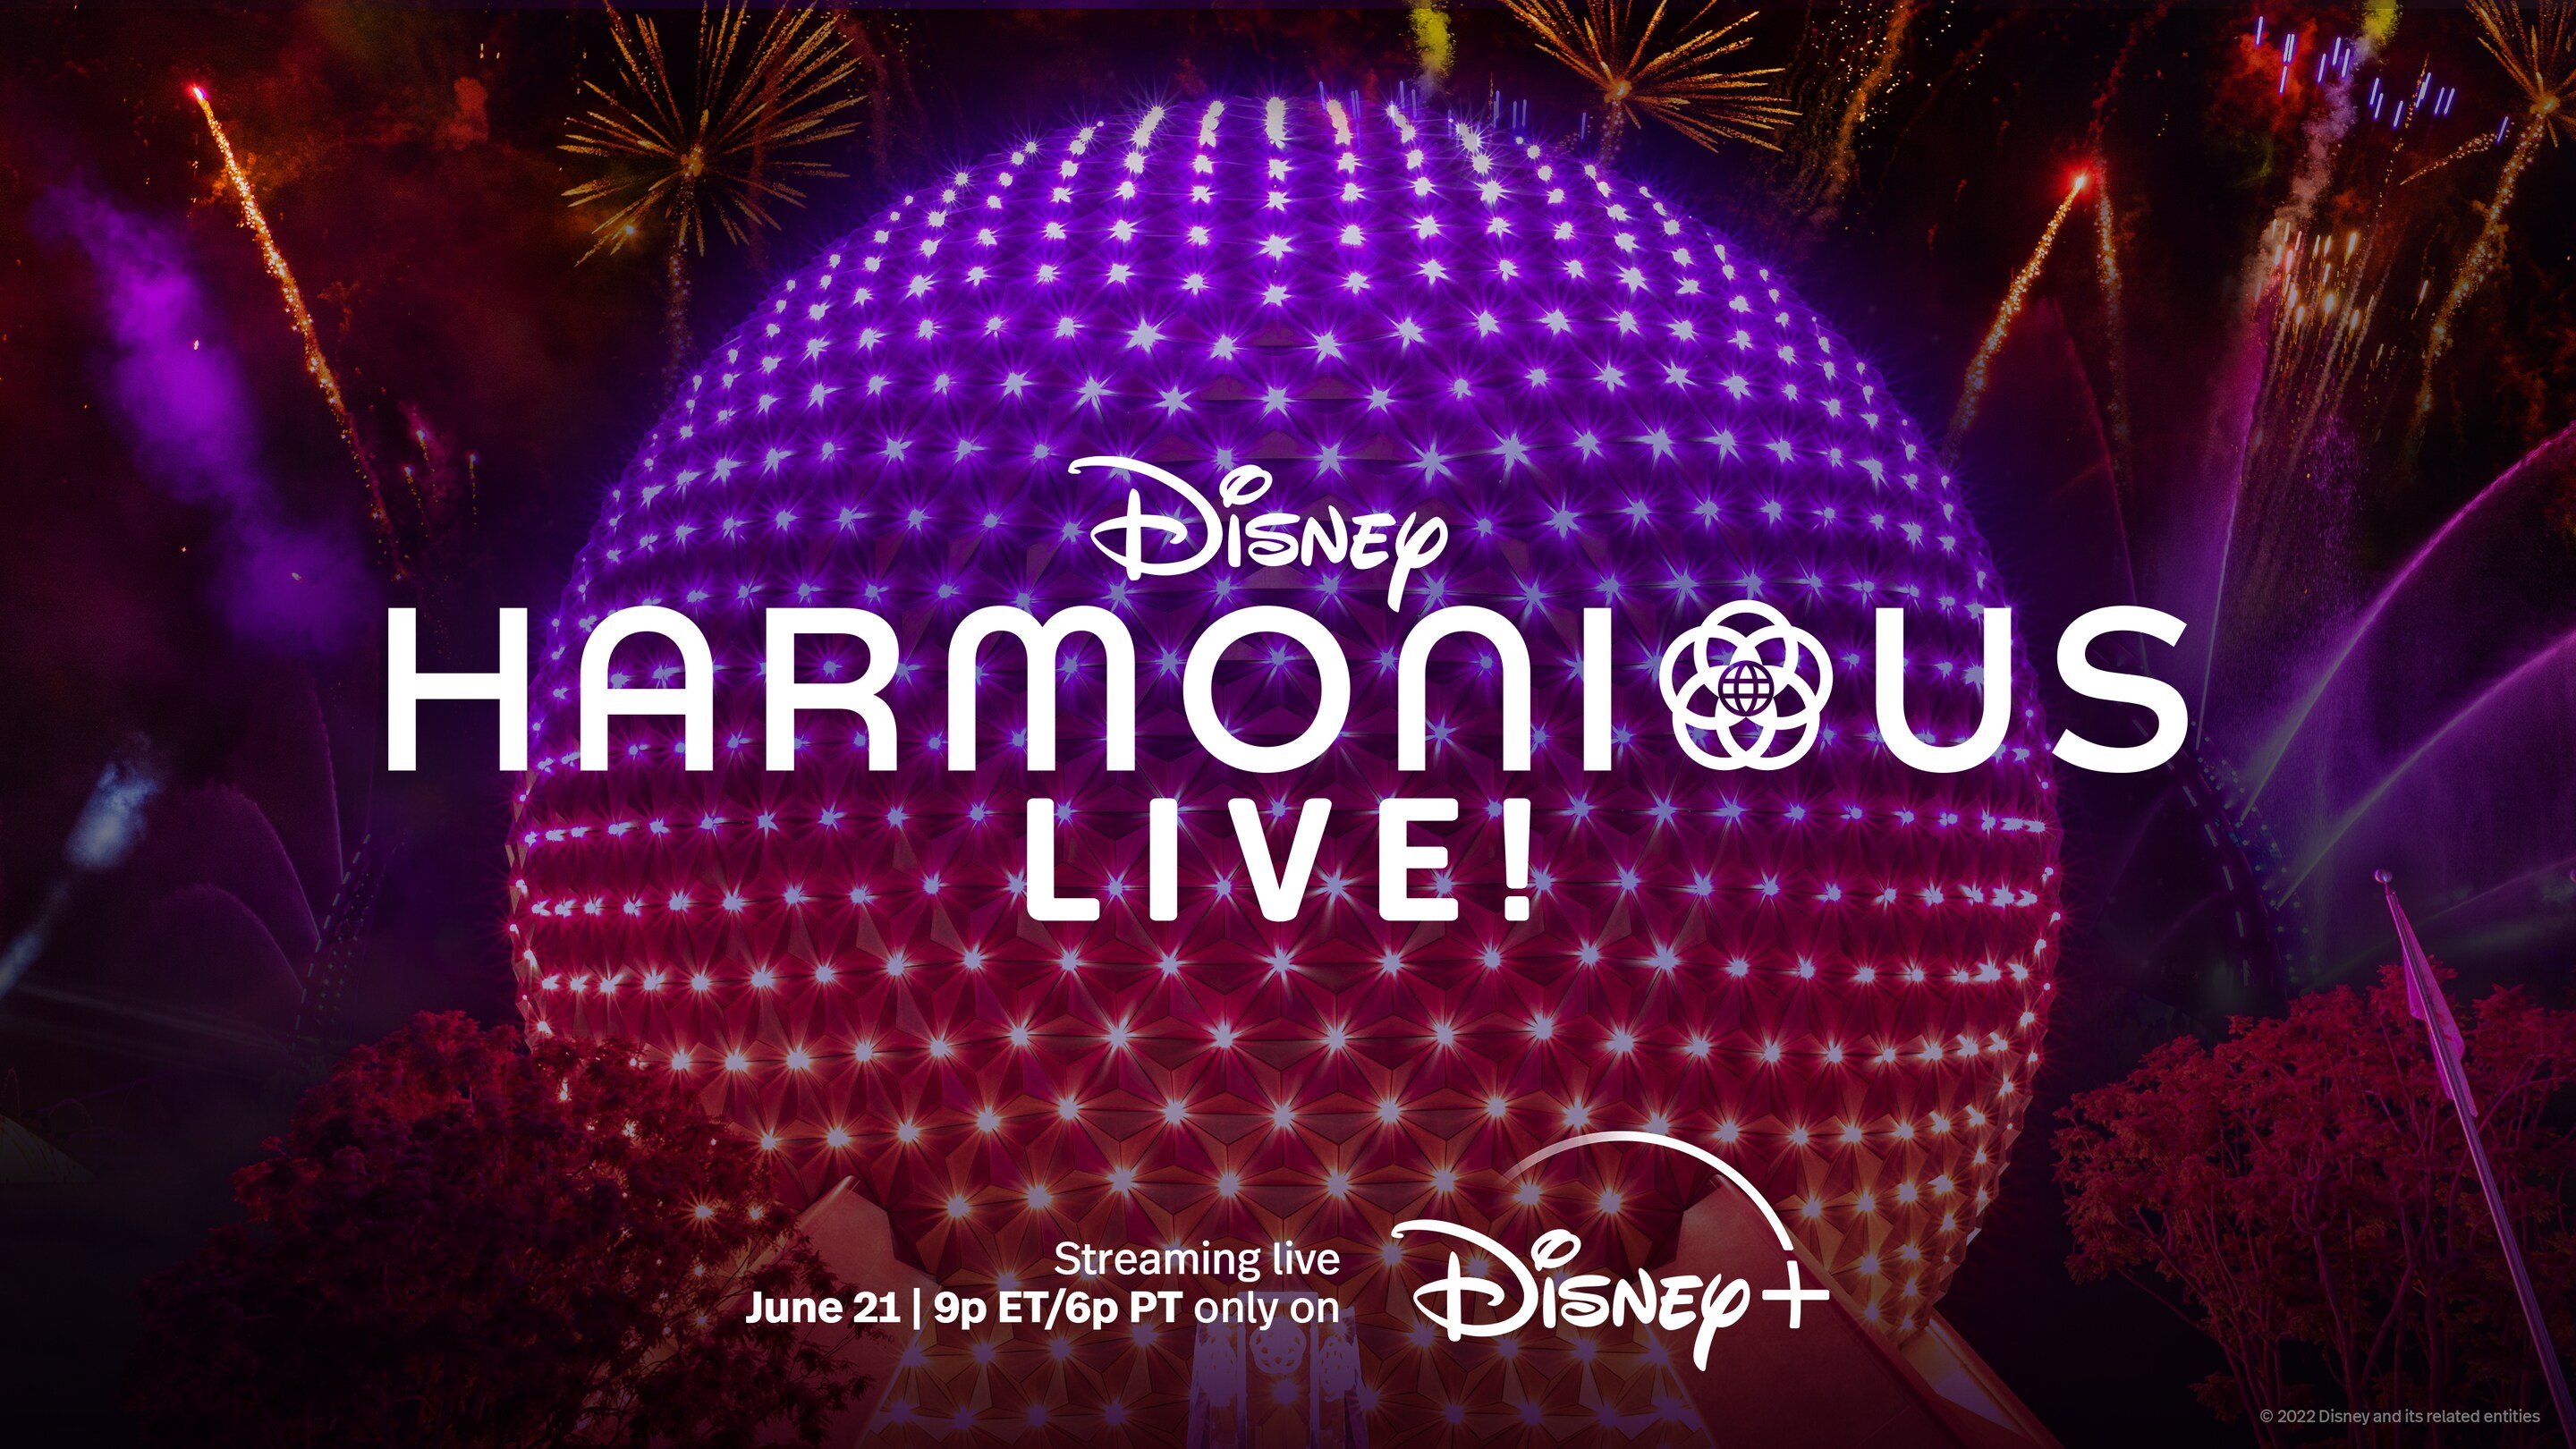 Disney+ To Livestream “Harmonious Live!” Nighttime Spectacular From EPCOT At Walt Disney World Resort On June 21